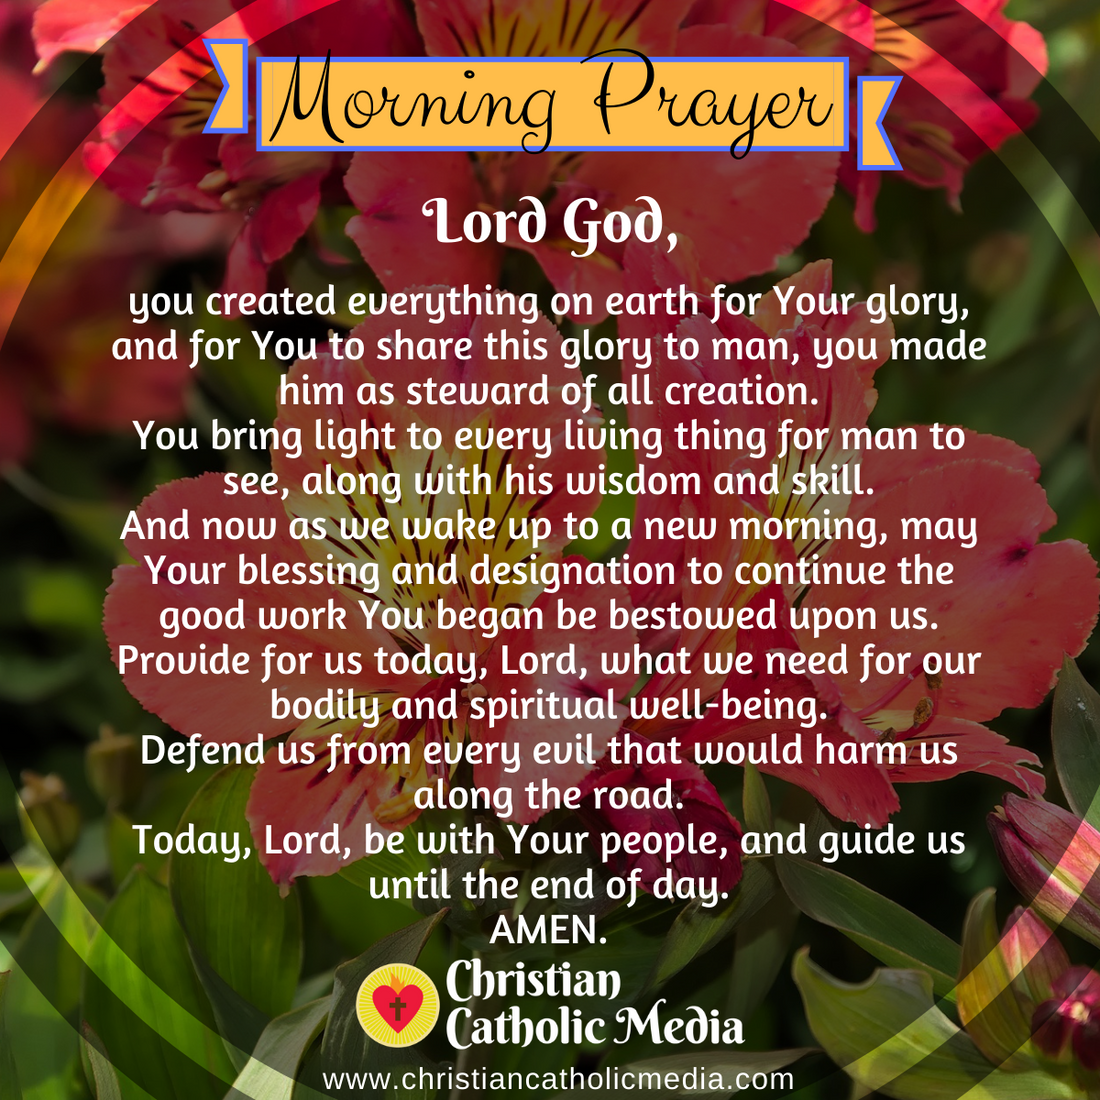 Morning Prayer Catholic Monday 4-27-2020